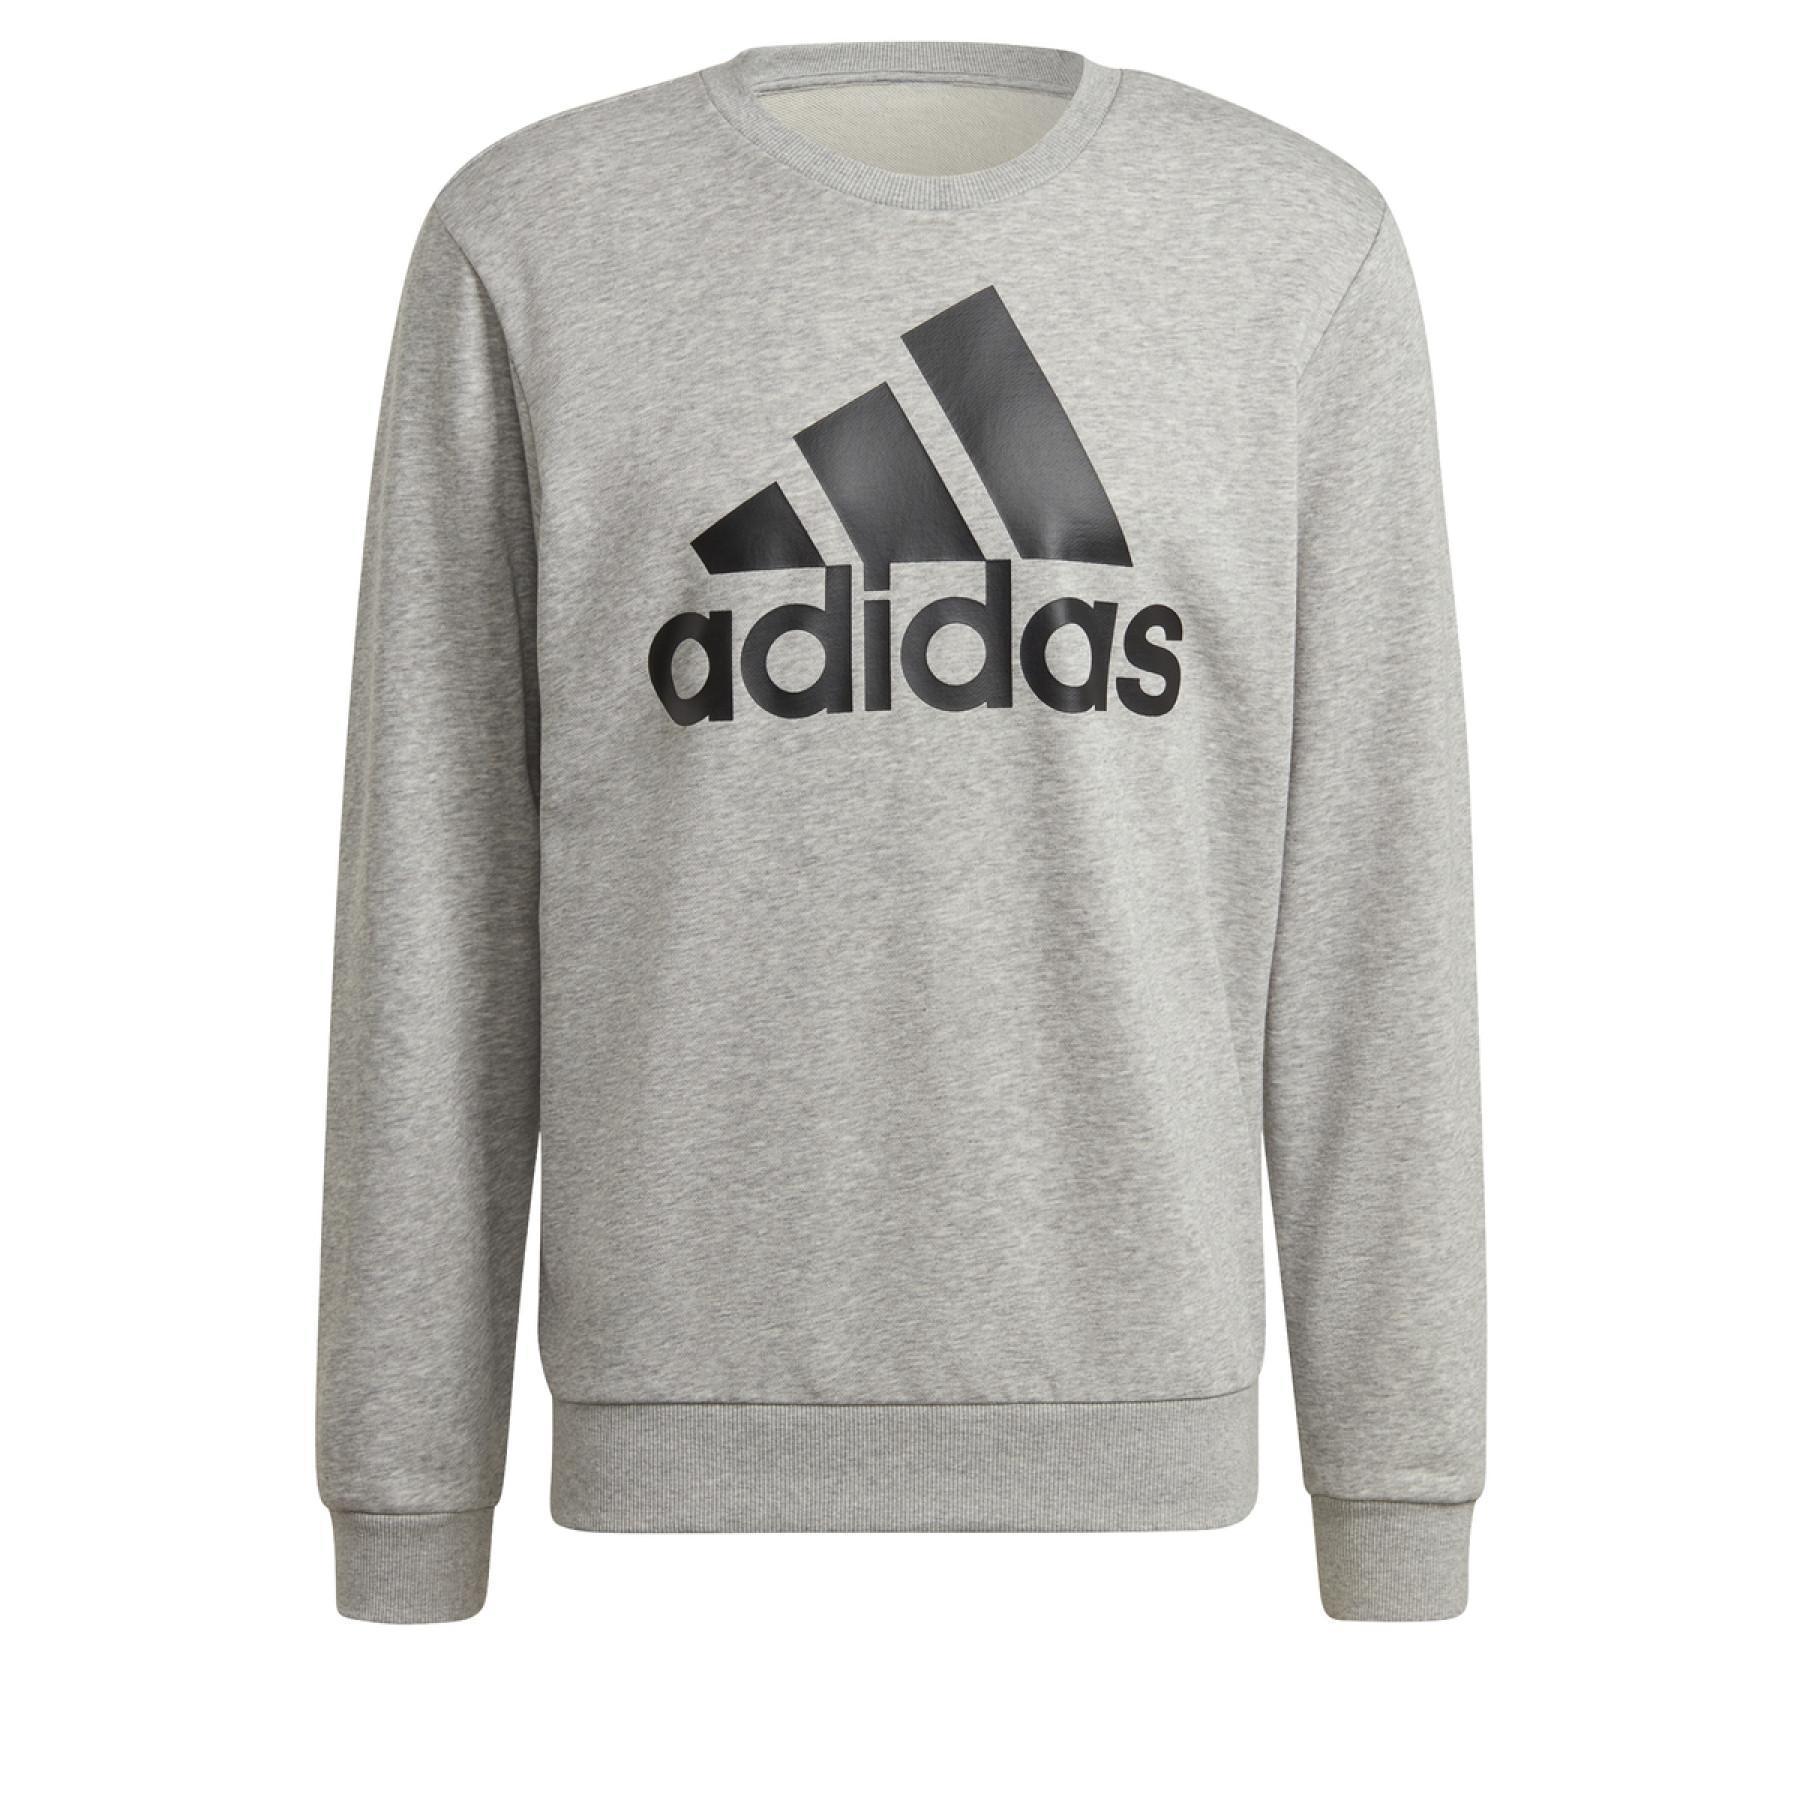 Sweatshirt adidas Essentials Big Logo - adidas - Brands - Lifestyle